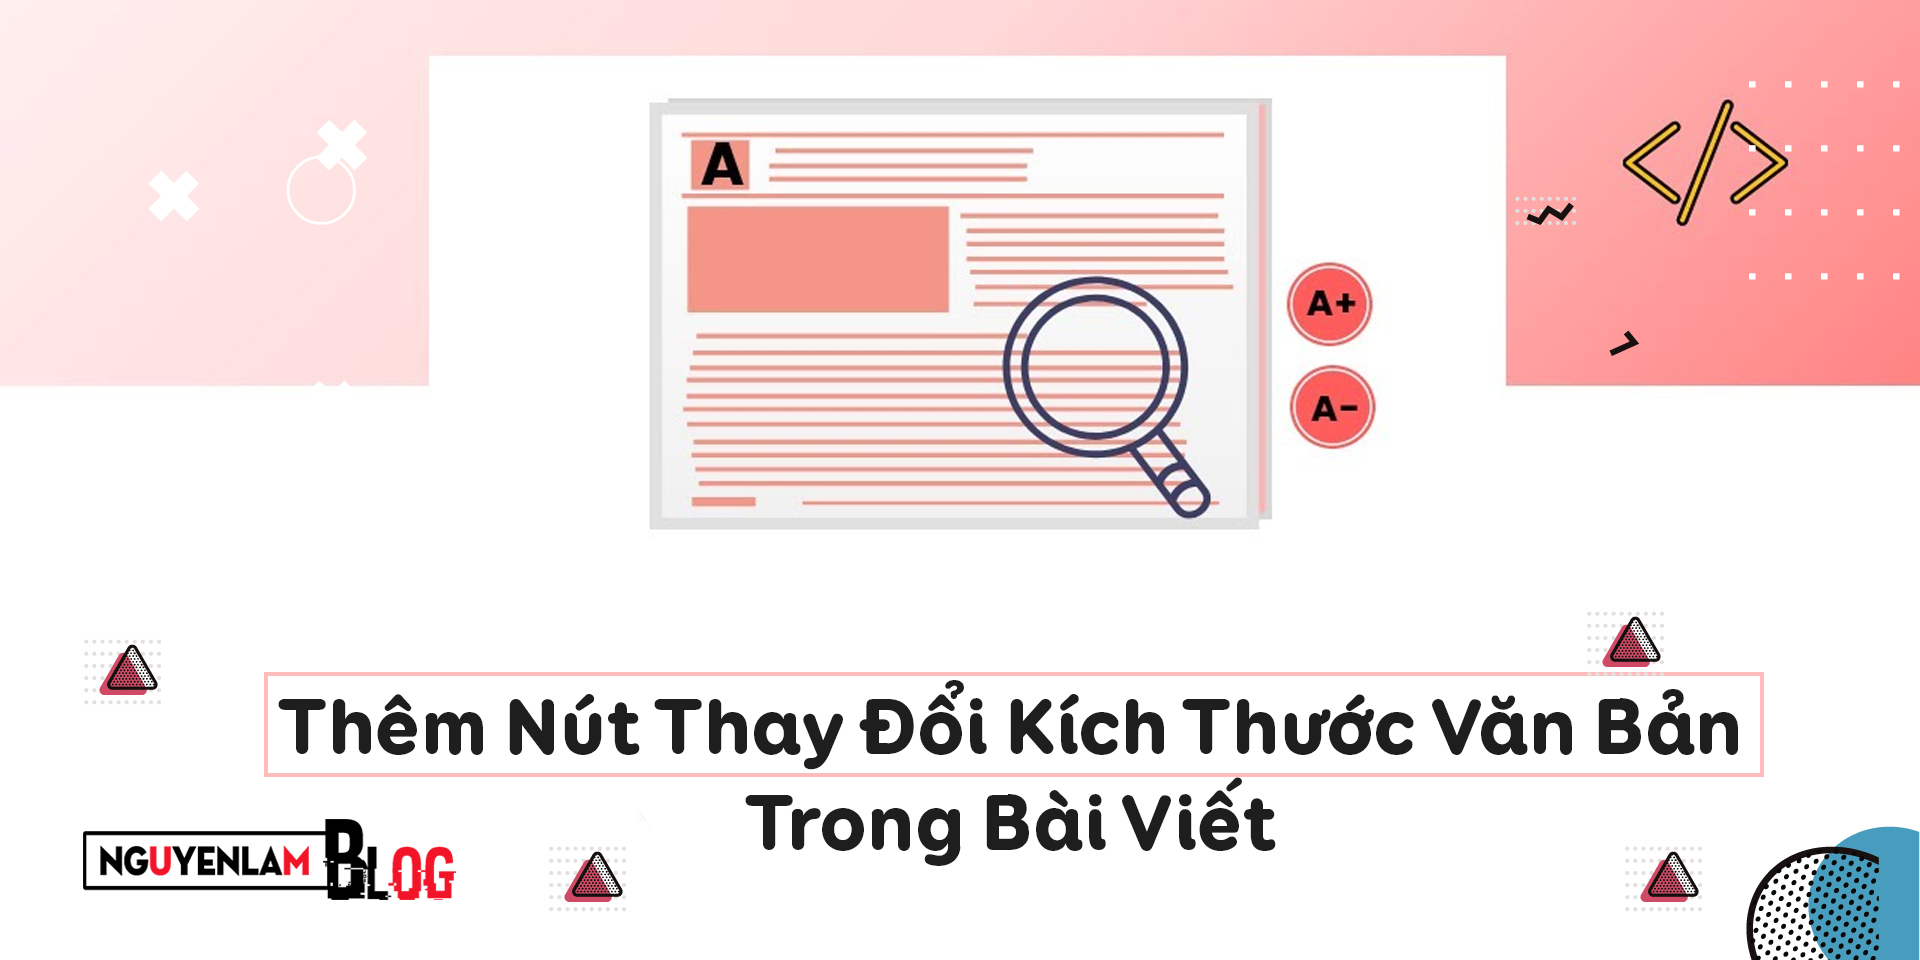 1627032355 489 Them Nut Thay Doi Kich Thuoc Van Ban Trong Bai